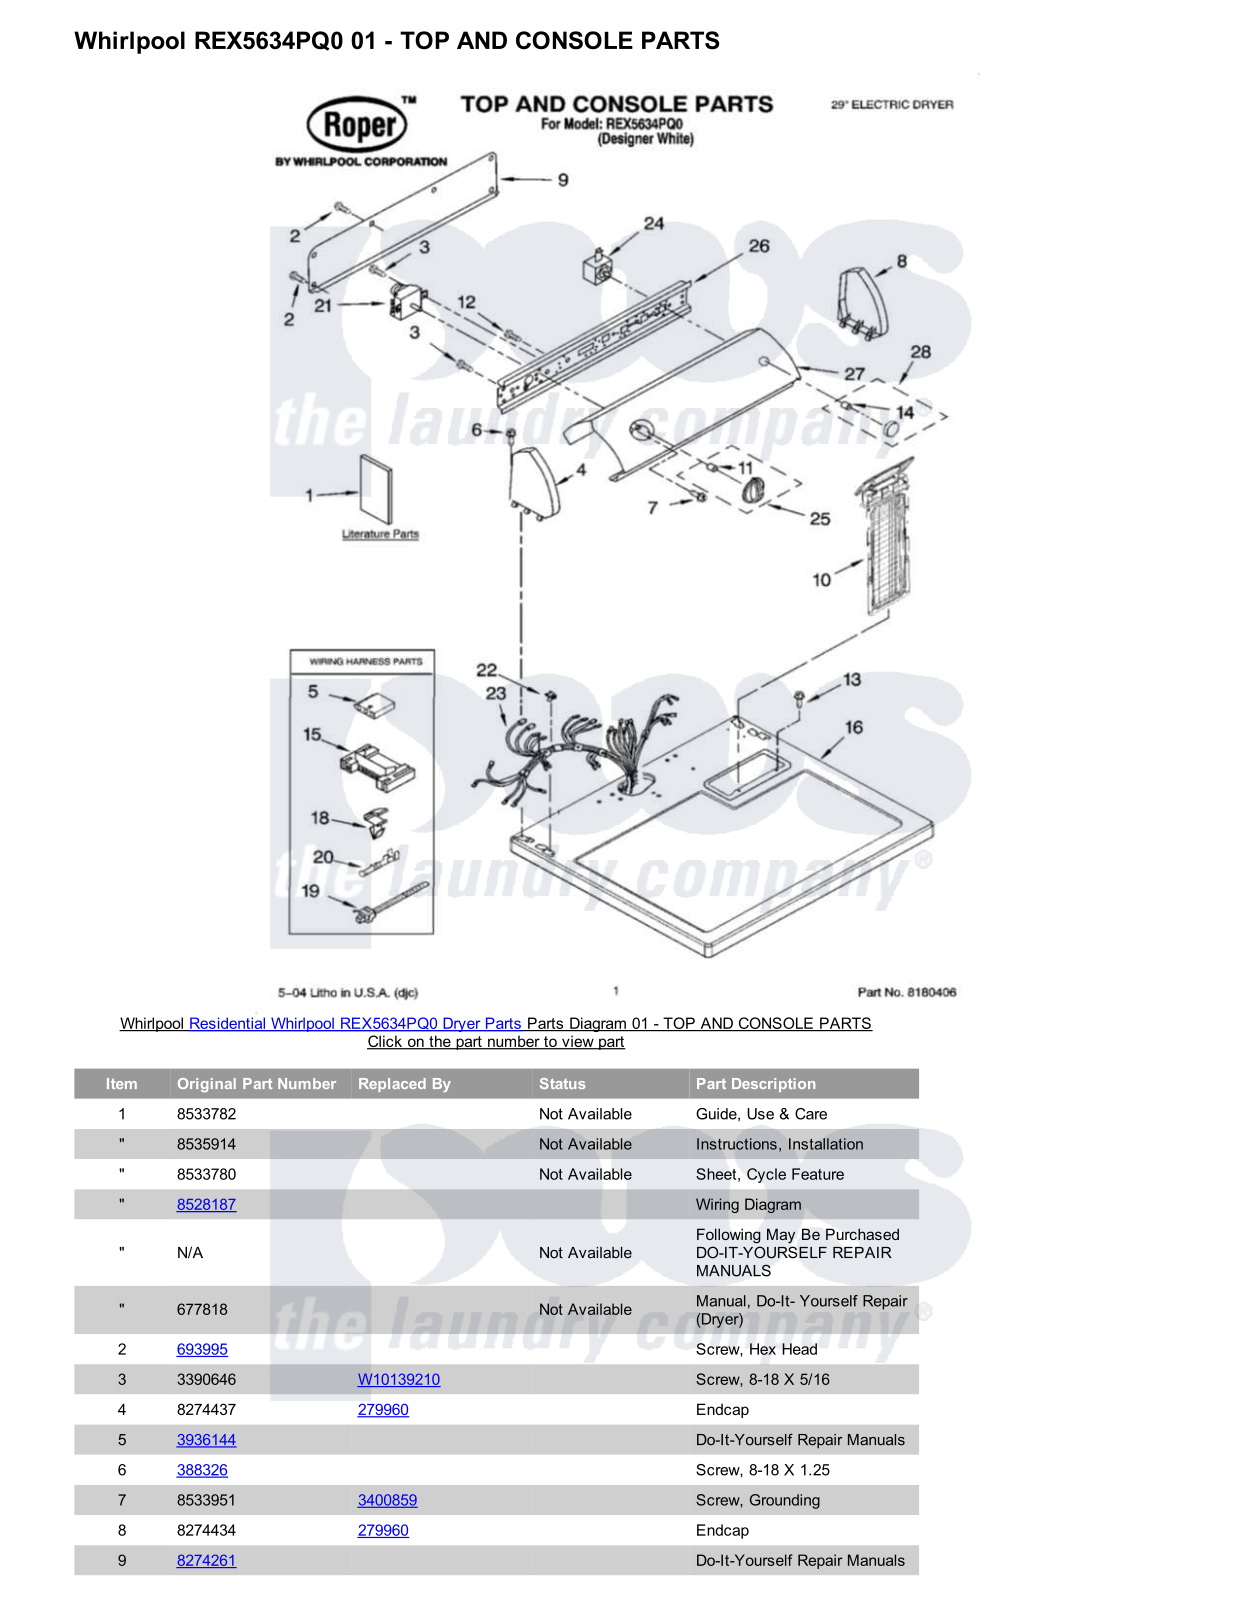 Whirlpool REX5634PQ0 Parts Diagram